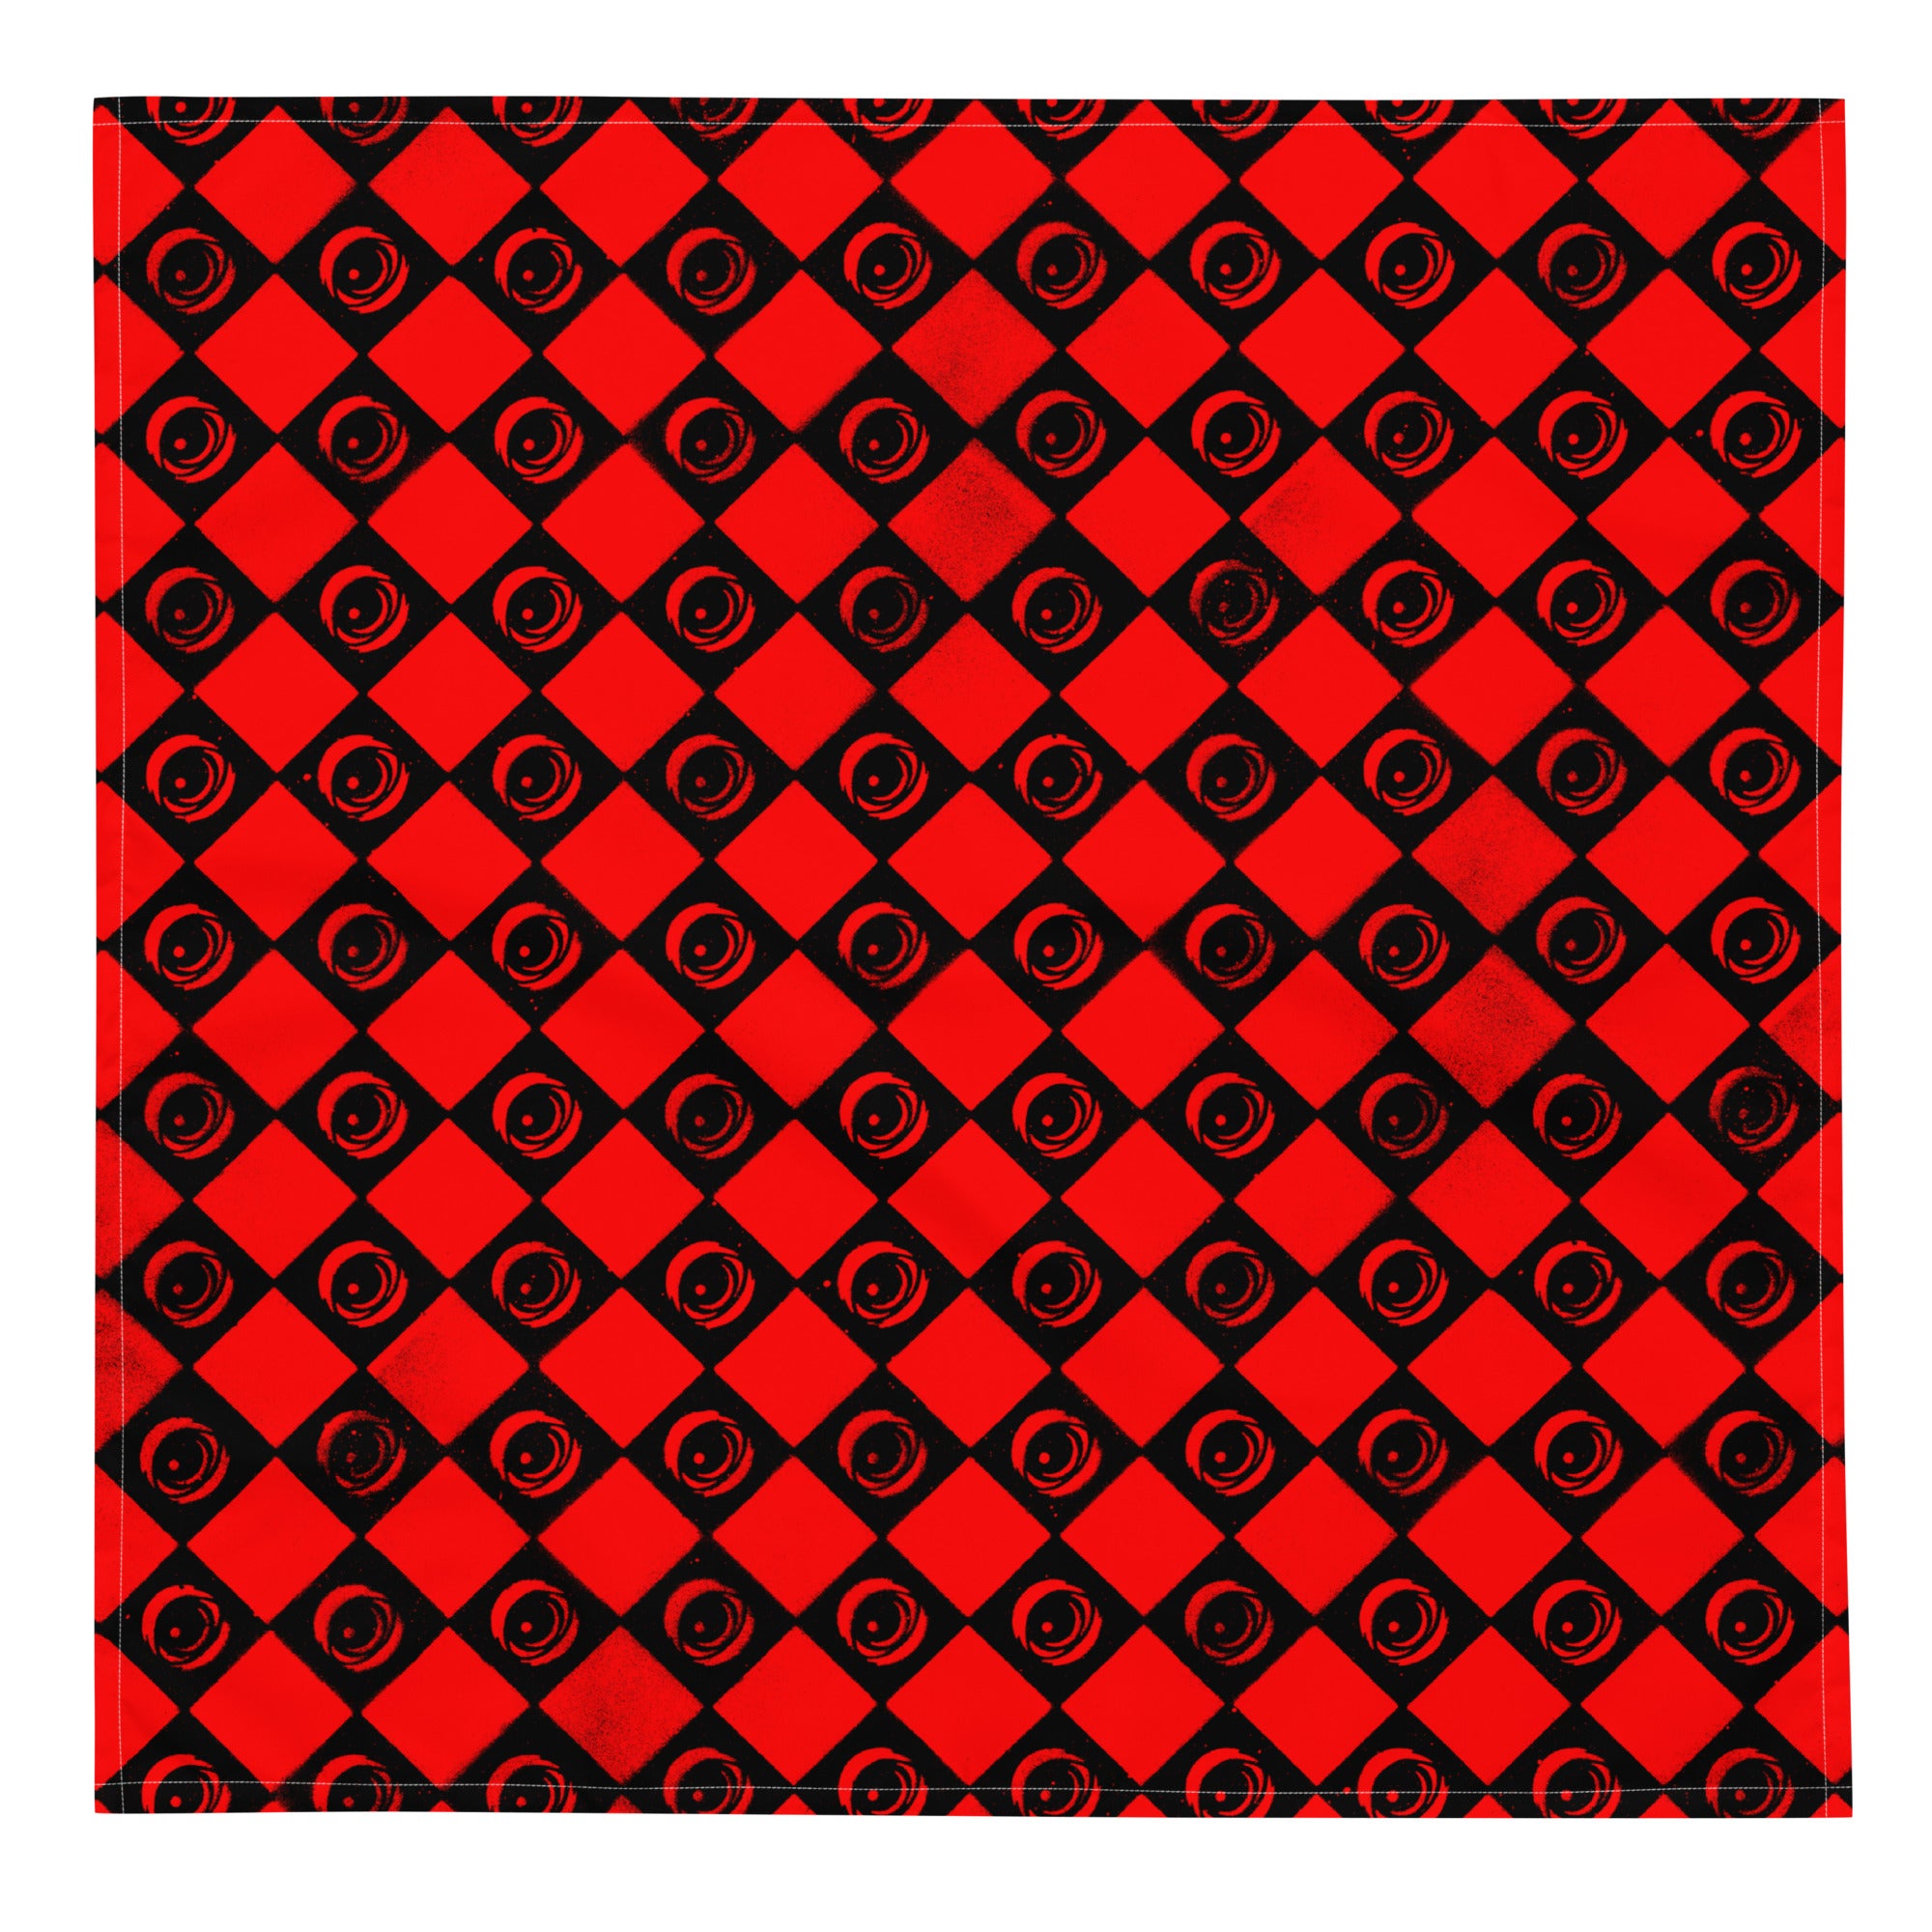 Checkered Eyez - Red and Black All-over print bandana